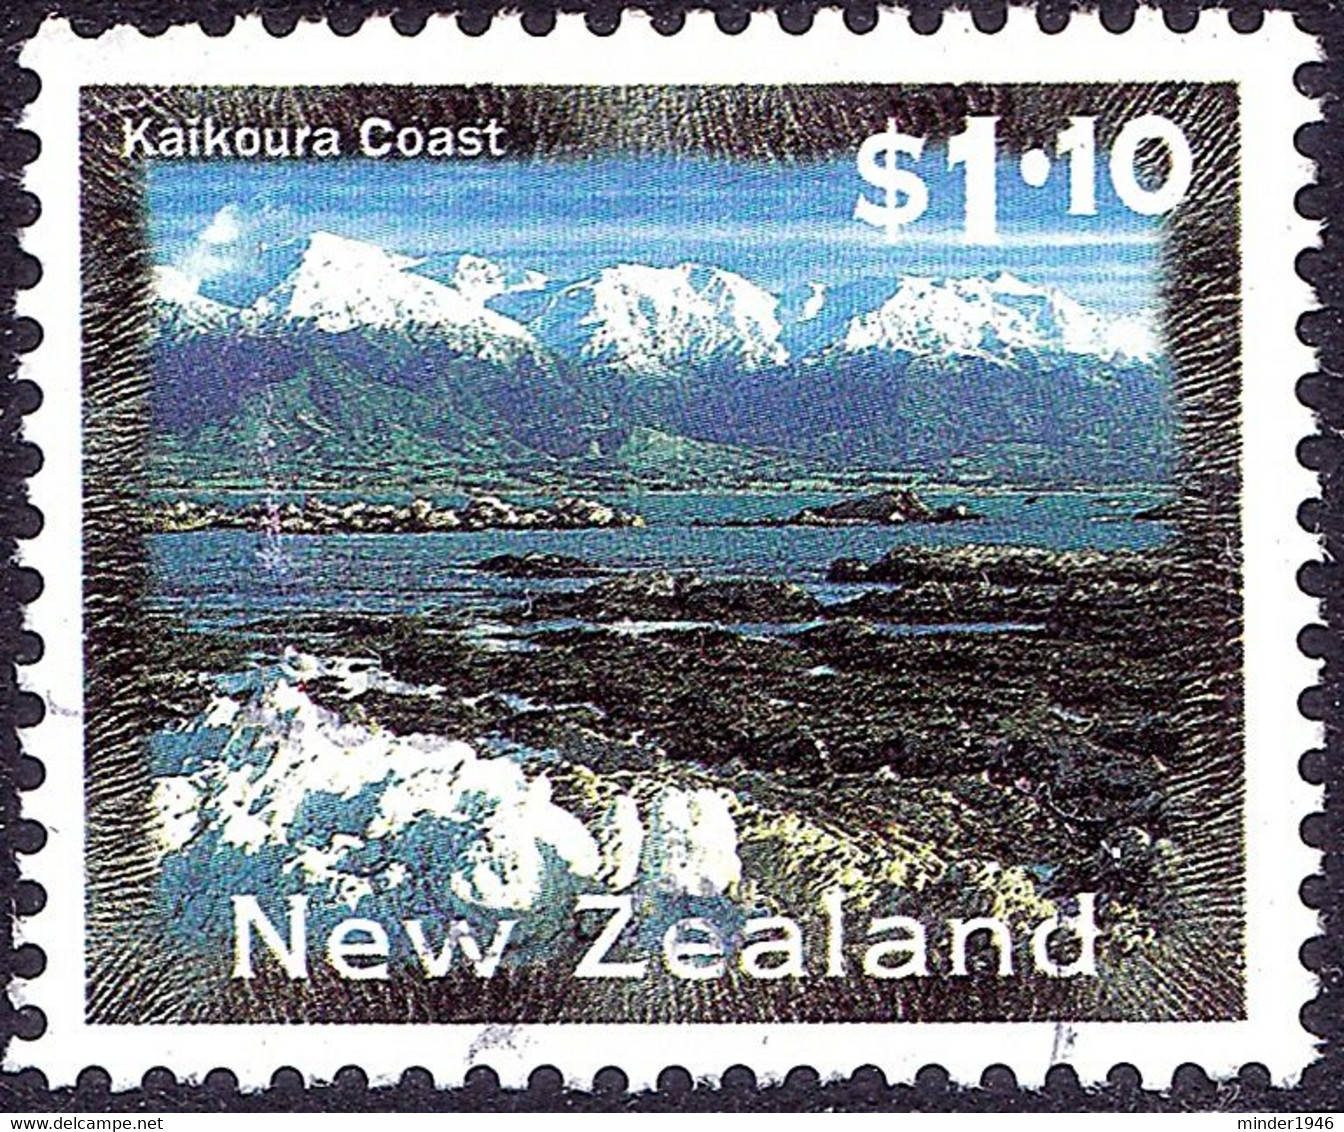 NEW ZEALAND 2000 QEII $1.10 Multicoloured, Scenery-Kaikoura Coast SG1932 FU - Gebraucht